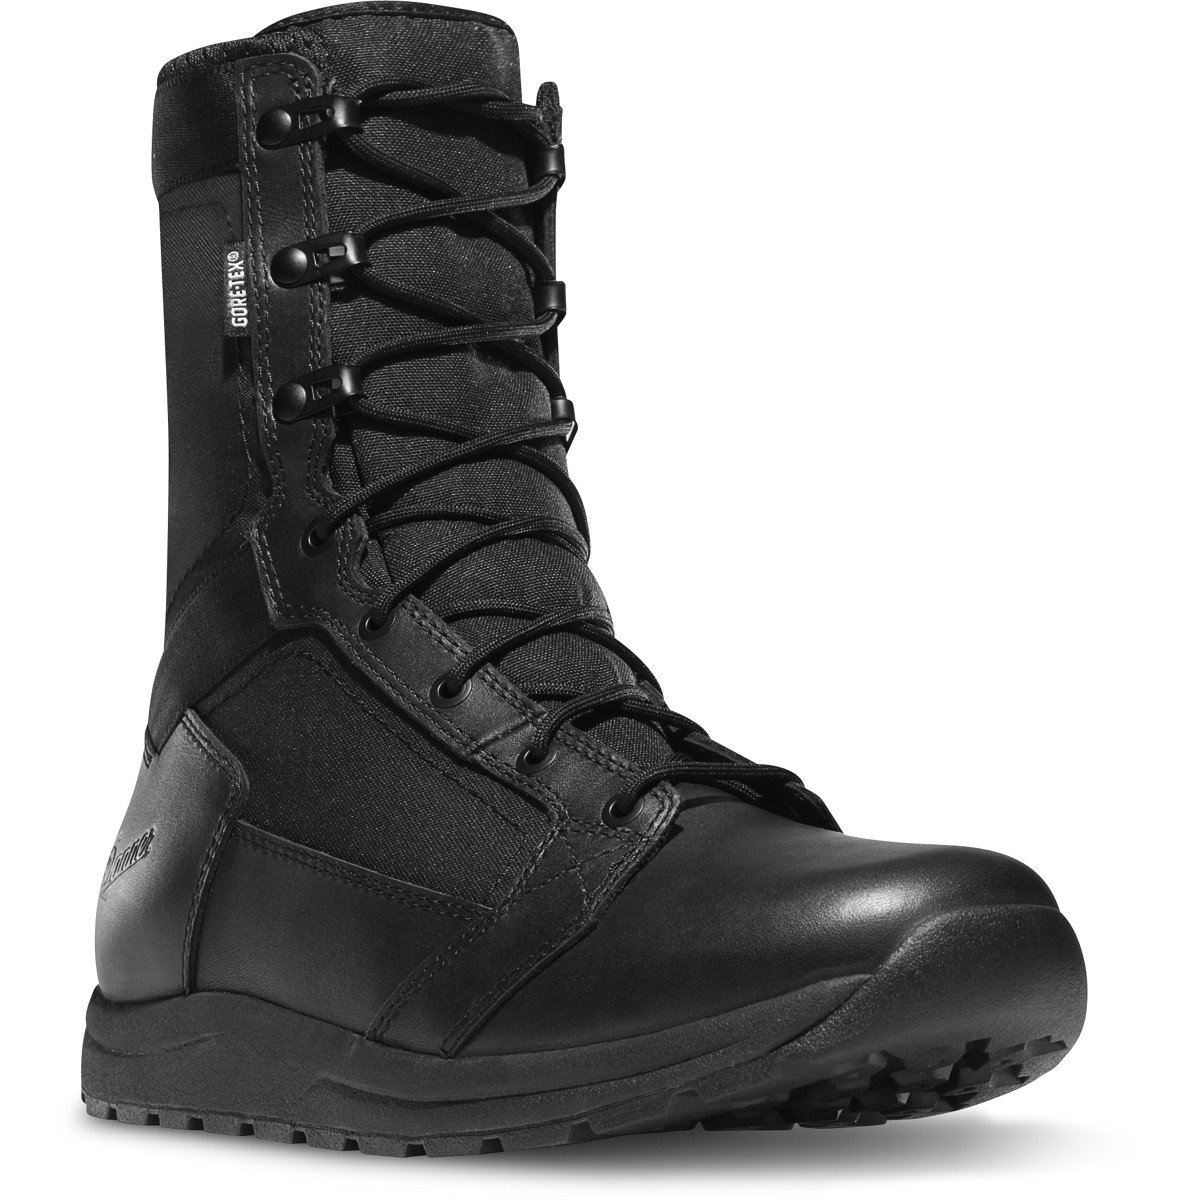 Danner Mens Tachyon Gtx Boots Black - IDX876032